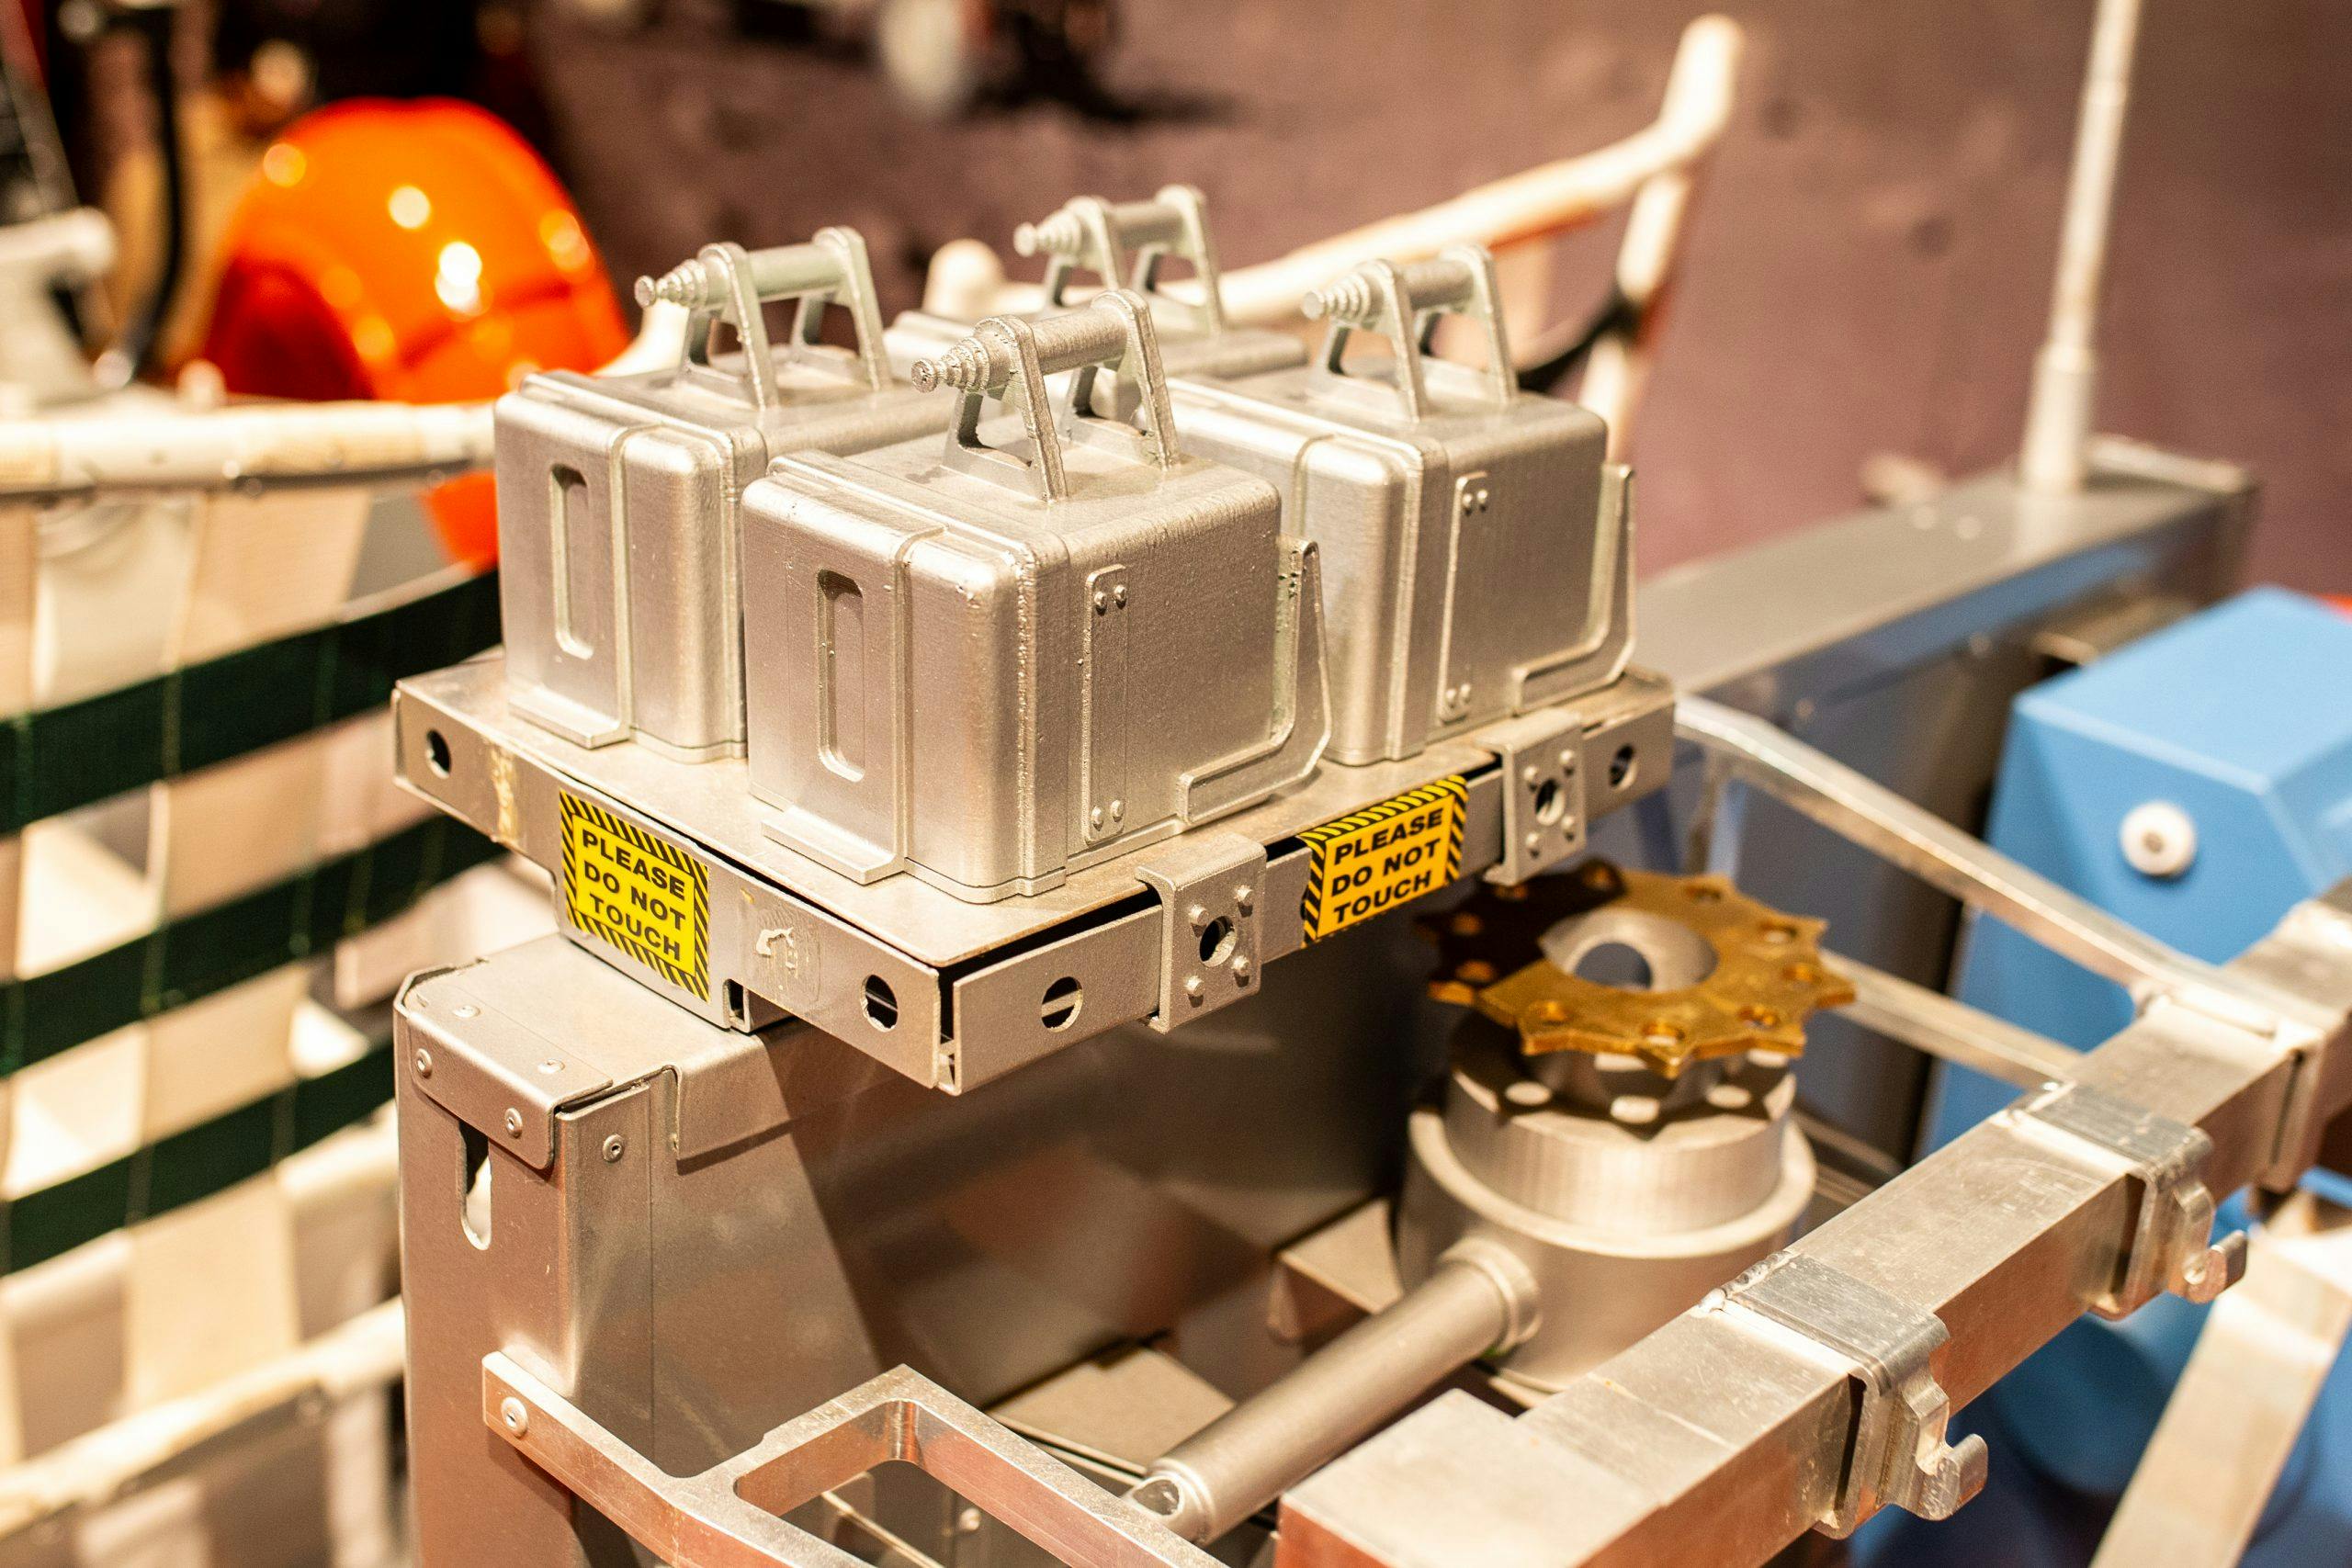 Lunar Rover engineering details